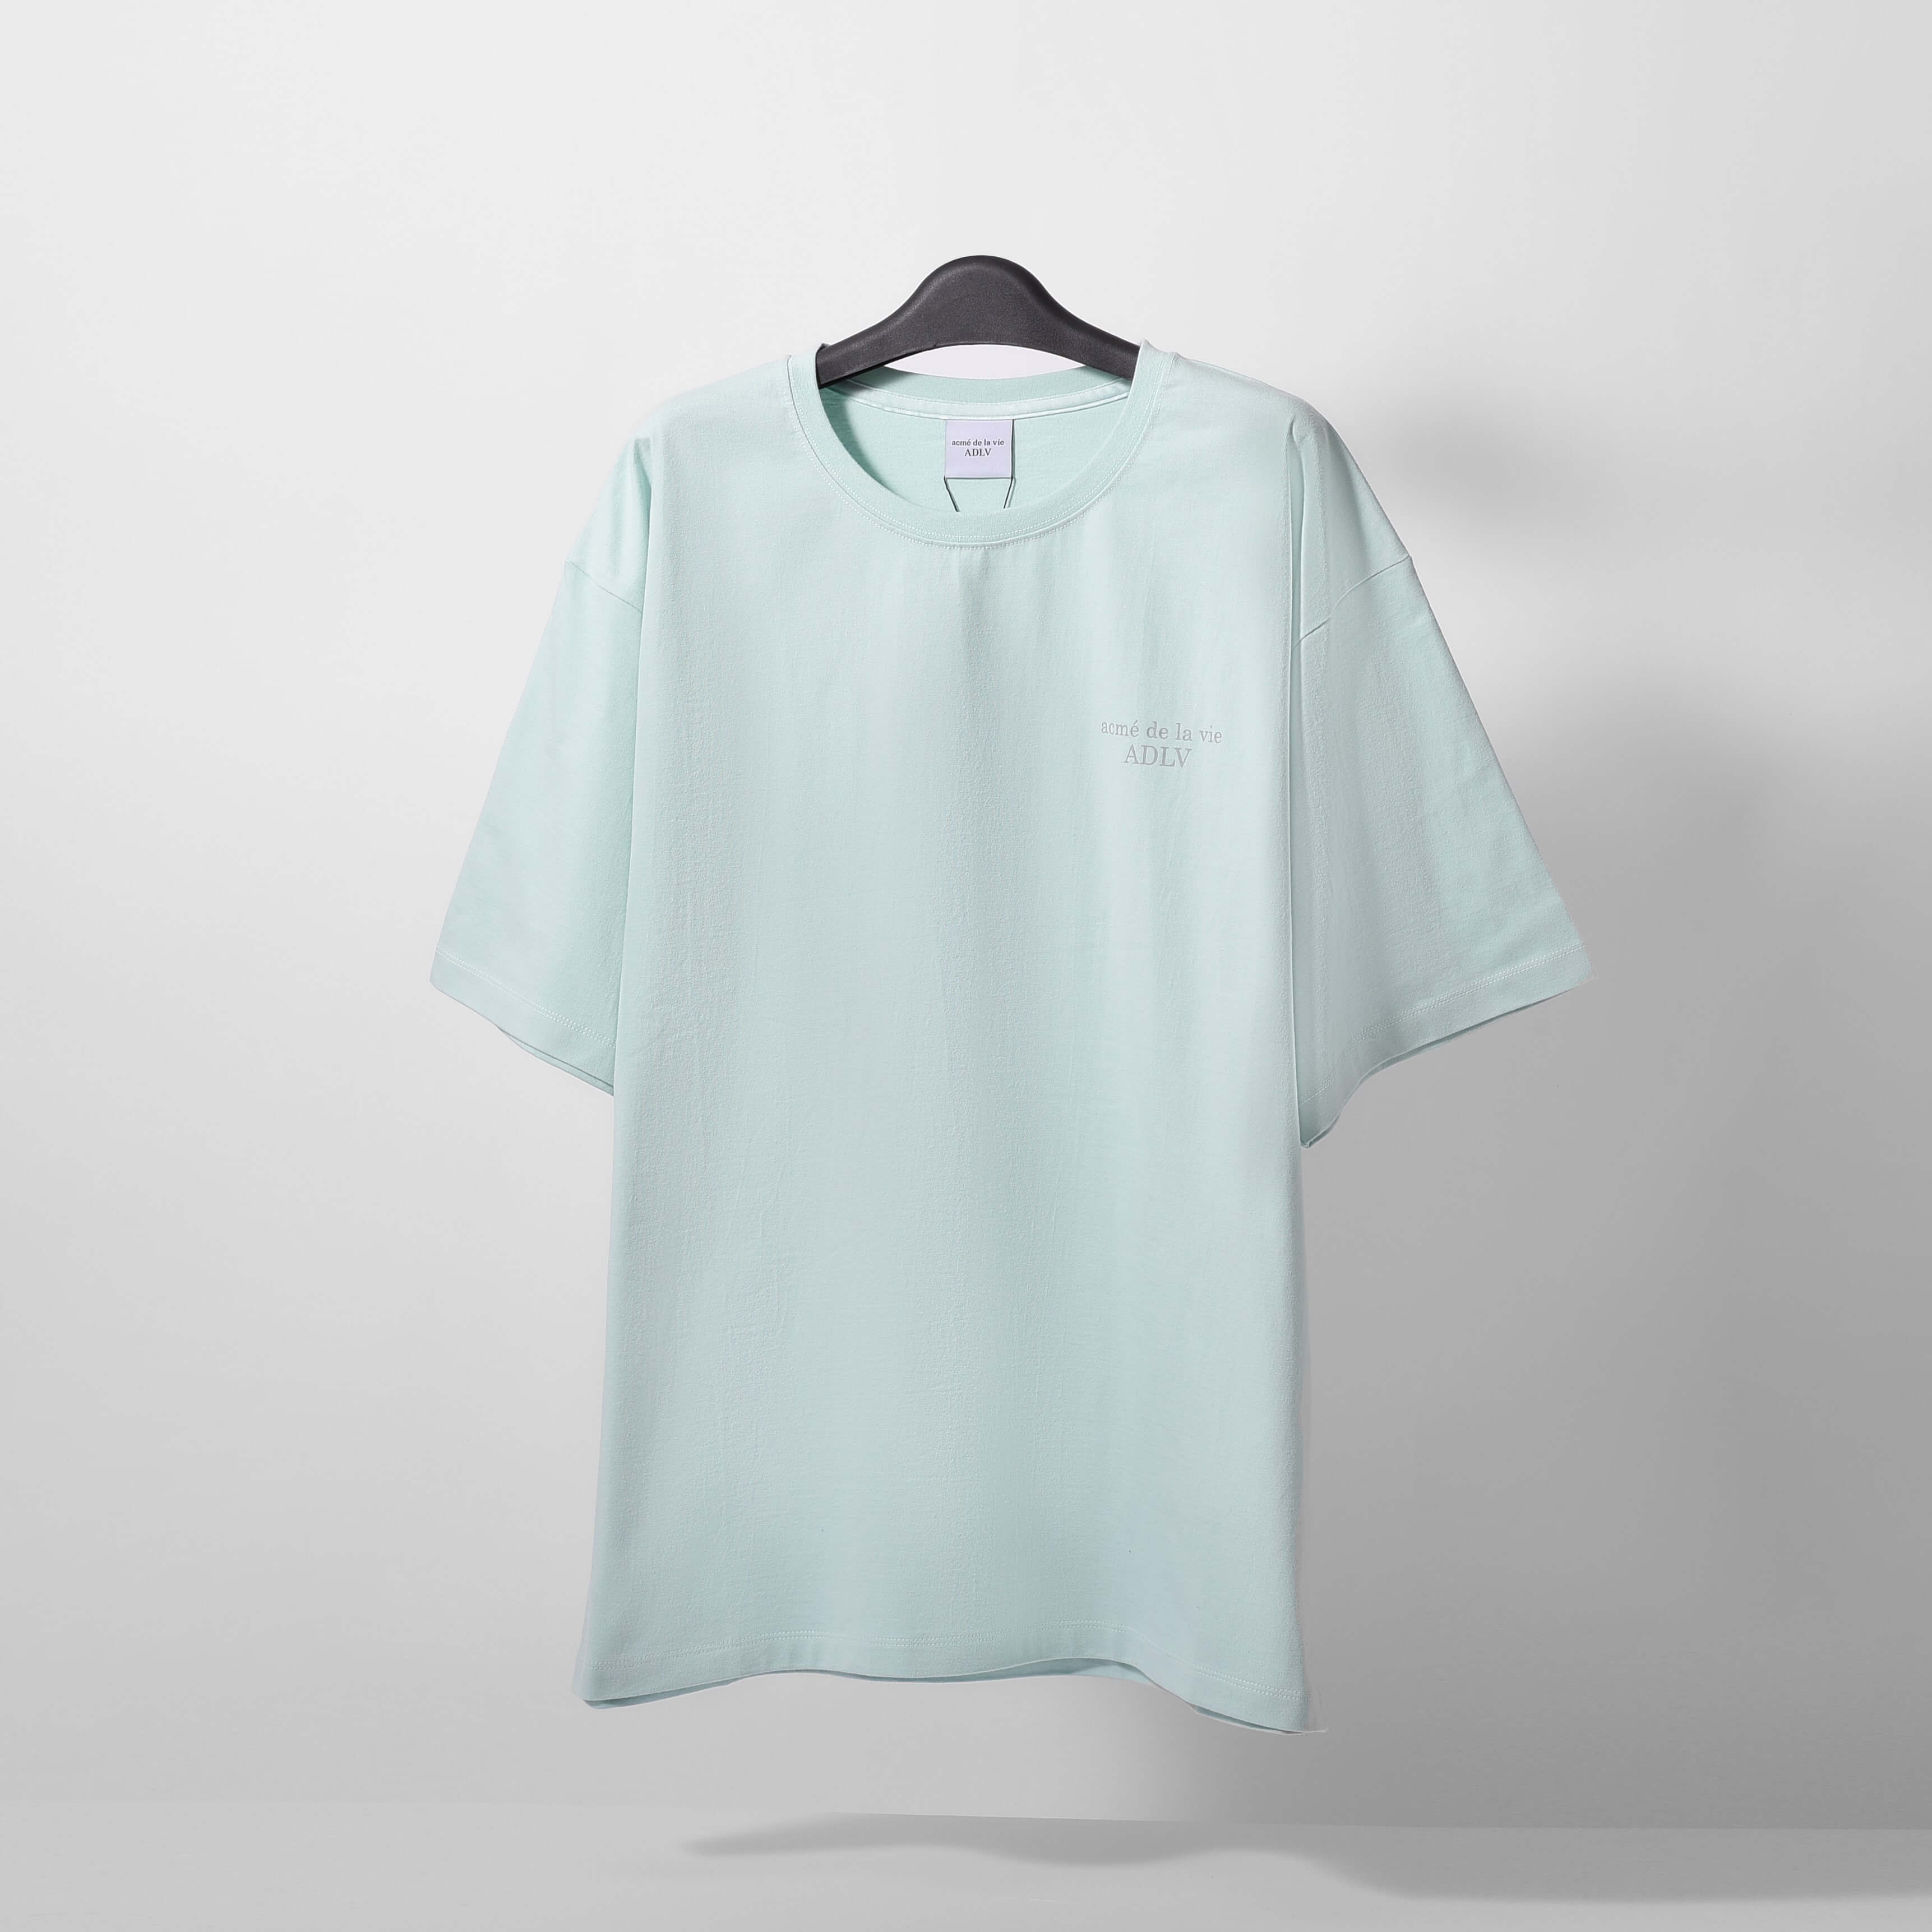 ADLV Basic Tshirt - Mint